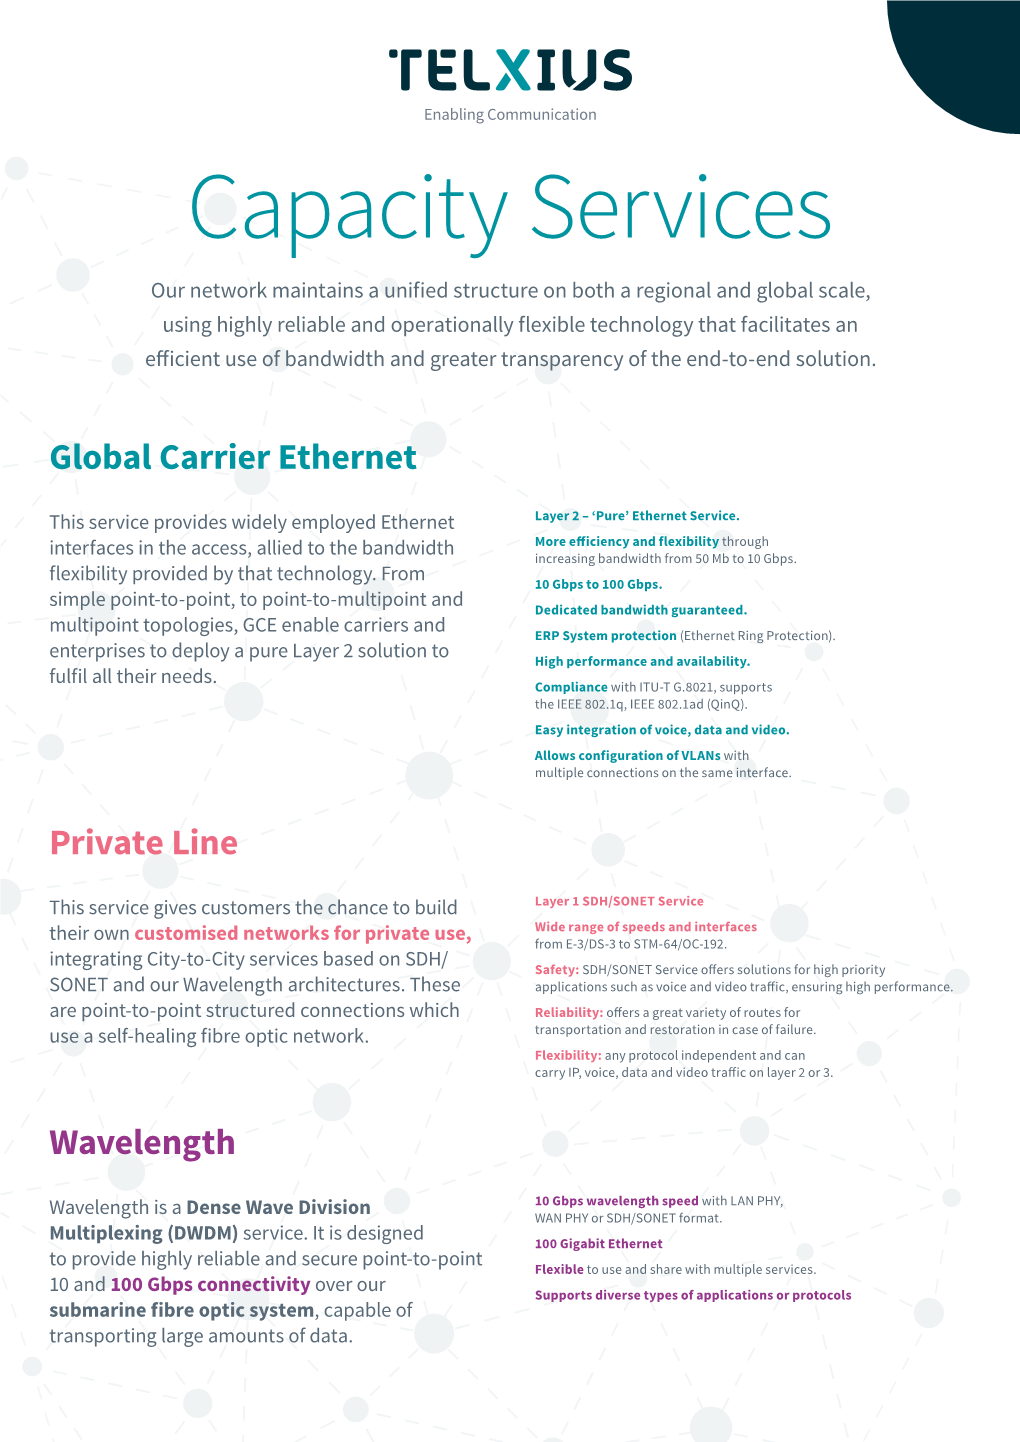 Capacity Services Fact Sheet